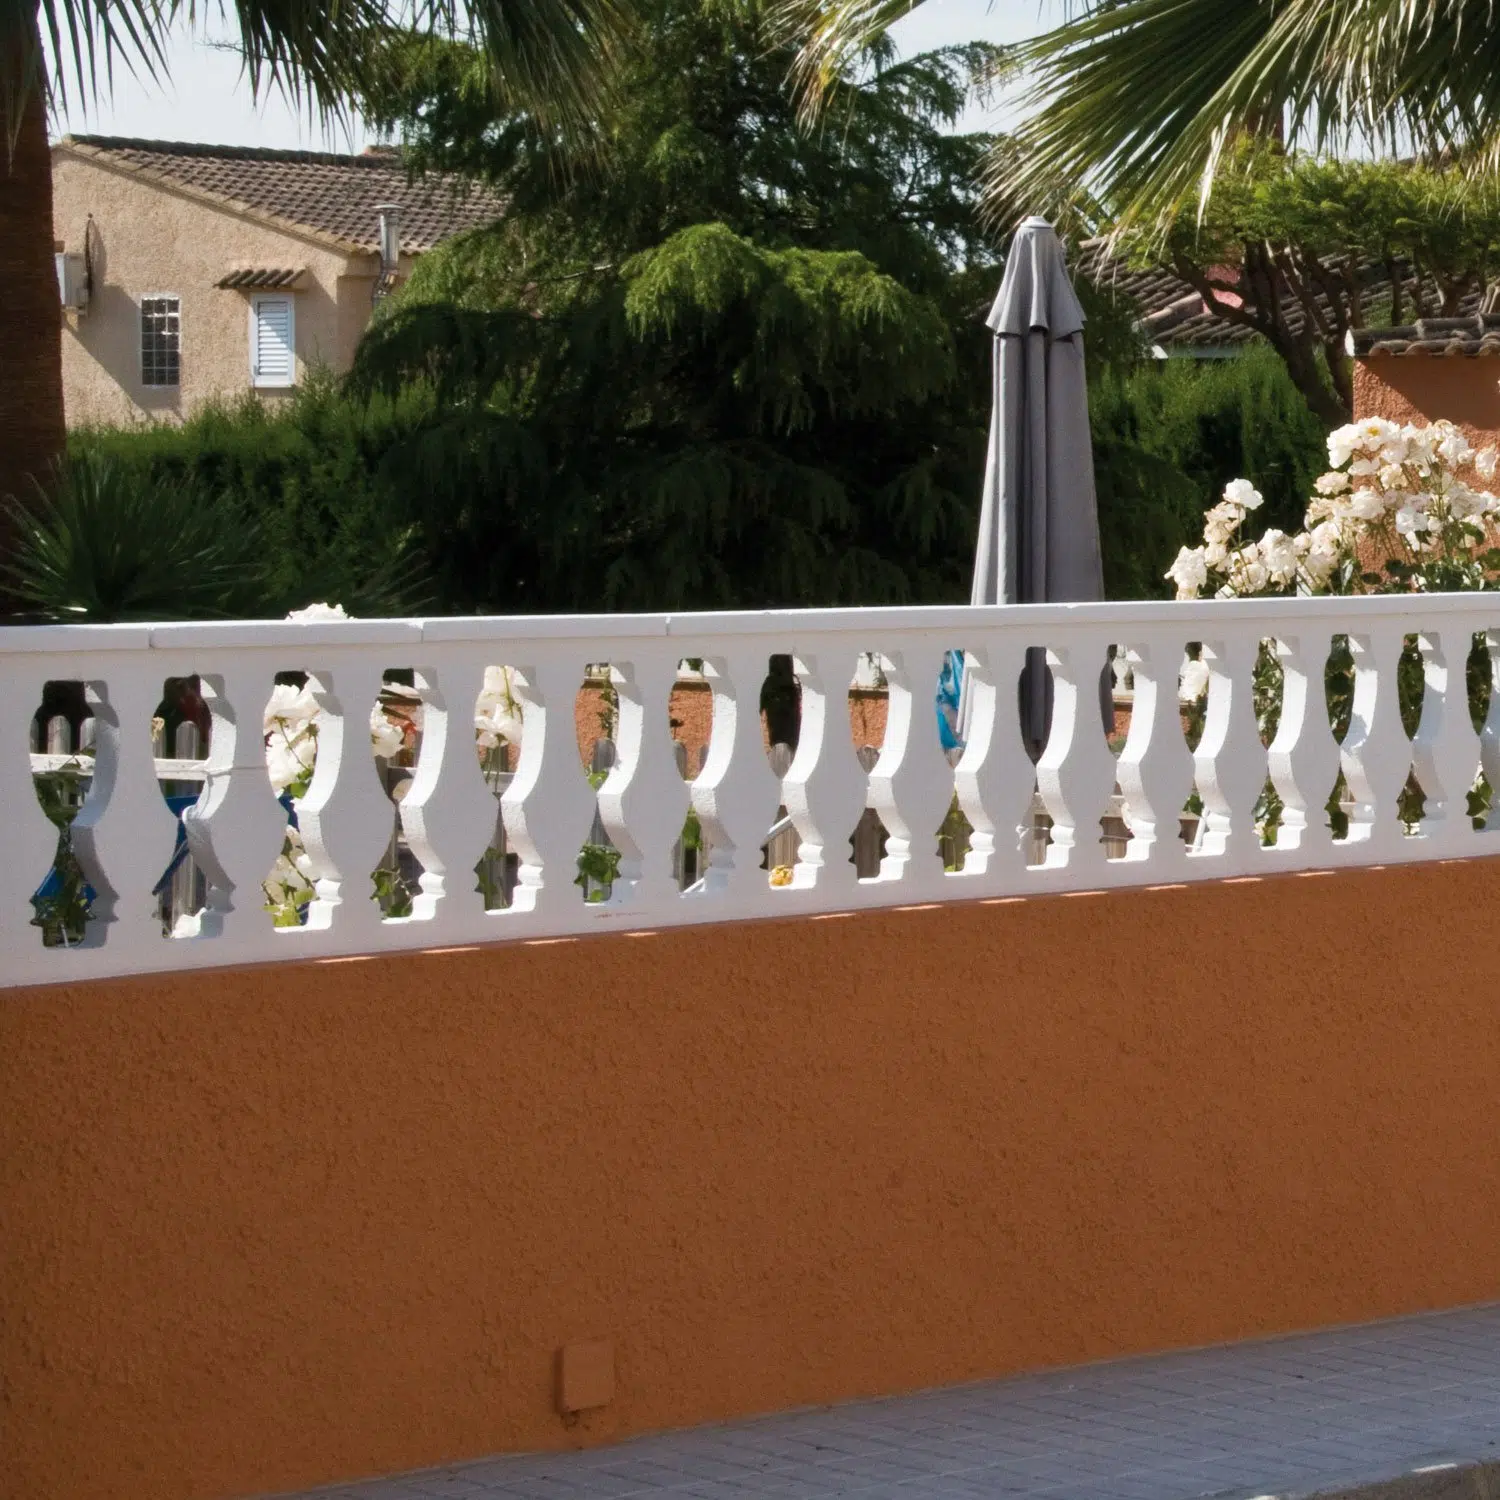 Balaustrada de piedra prensada Marbella ejemplo 2 | comprar balaustres